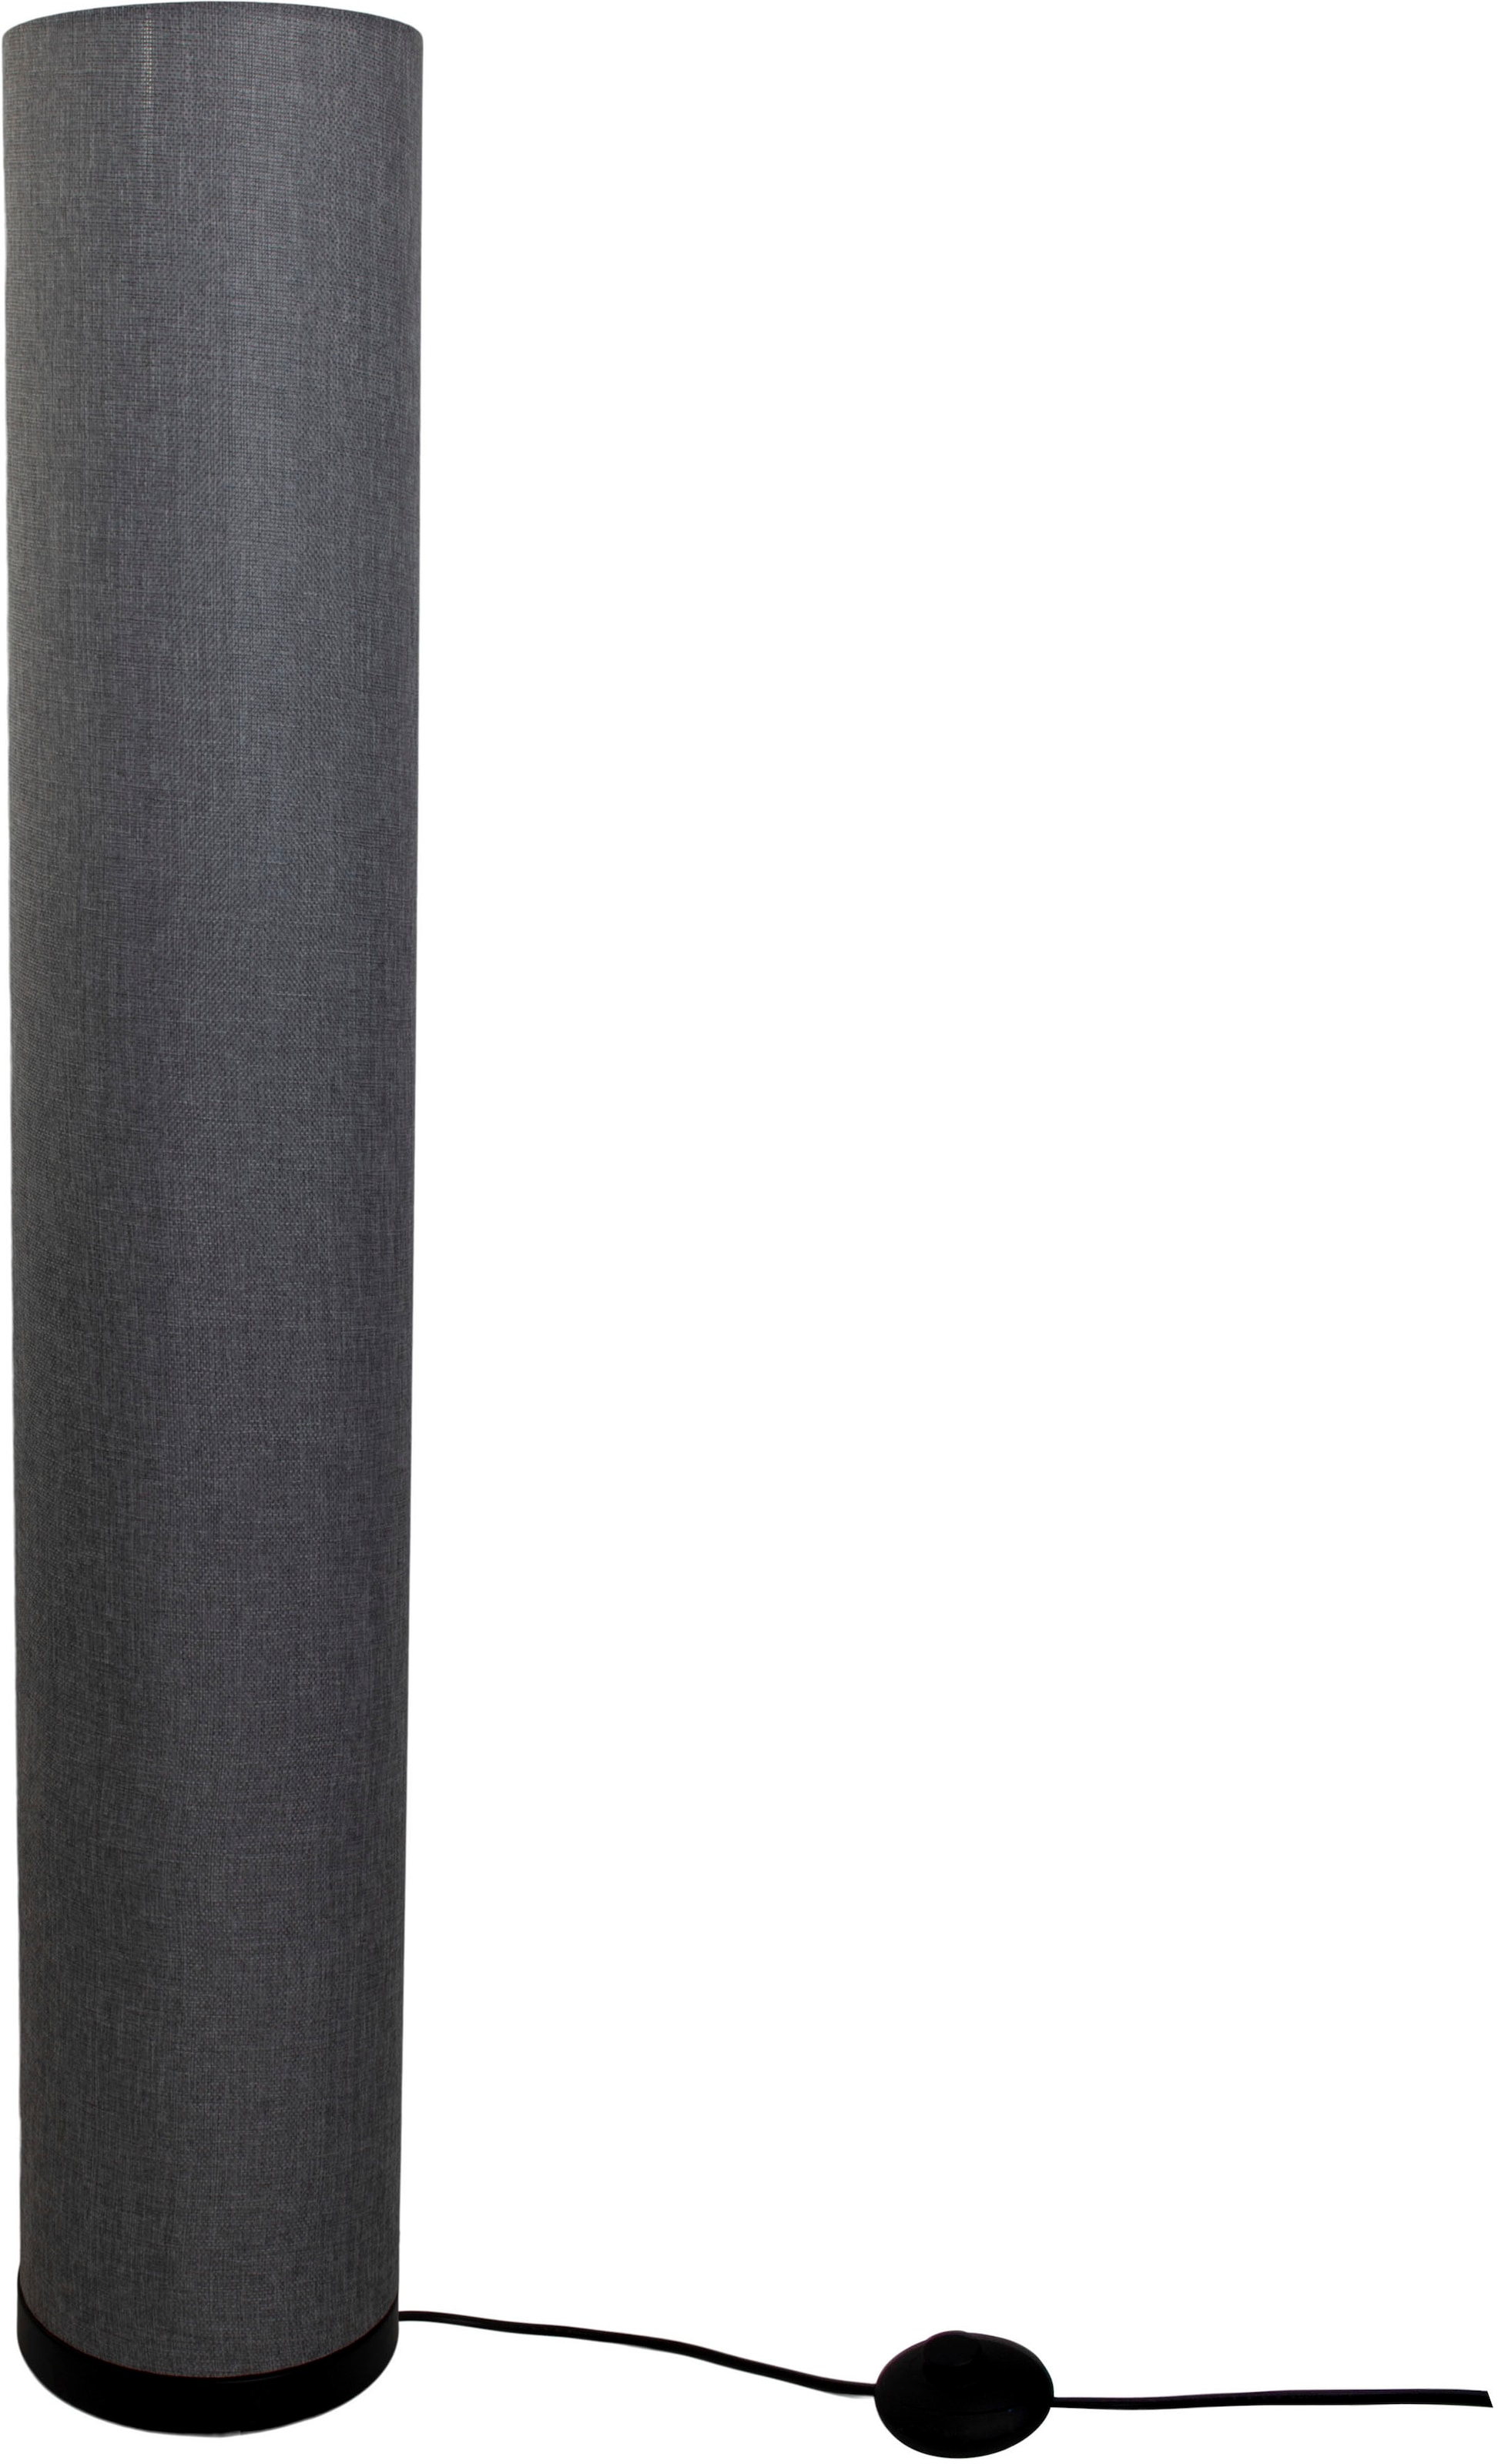 näve Stehlampe »Beate«, 3 flammig-flammig, Metall/Textil, exkl. 3x E27 max. 40W, Höhe: 110cm, Farbe: grau